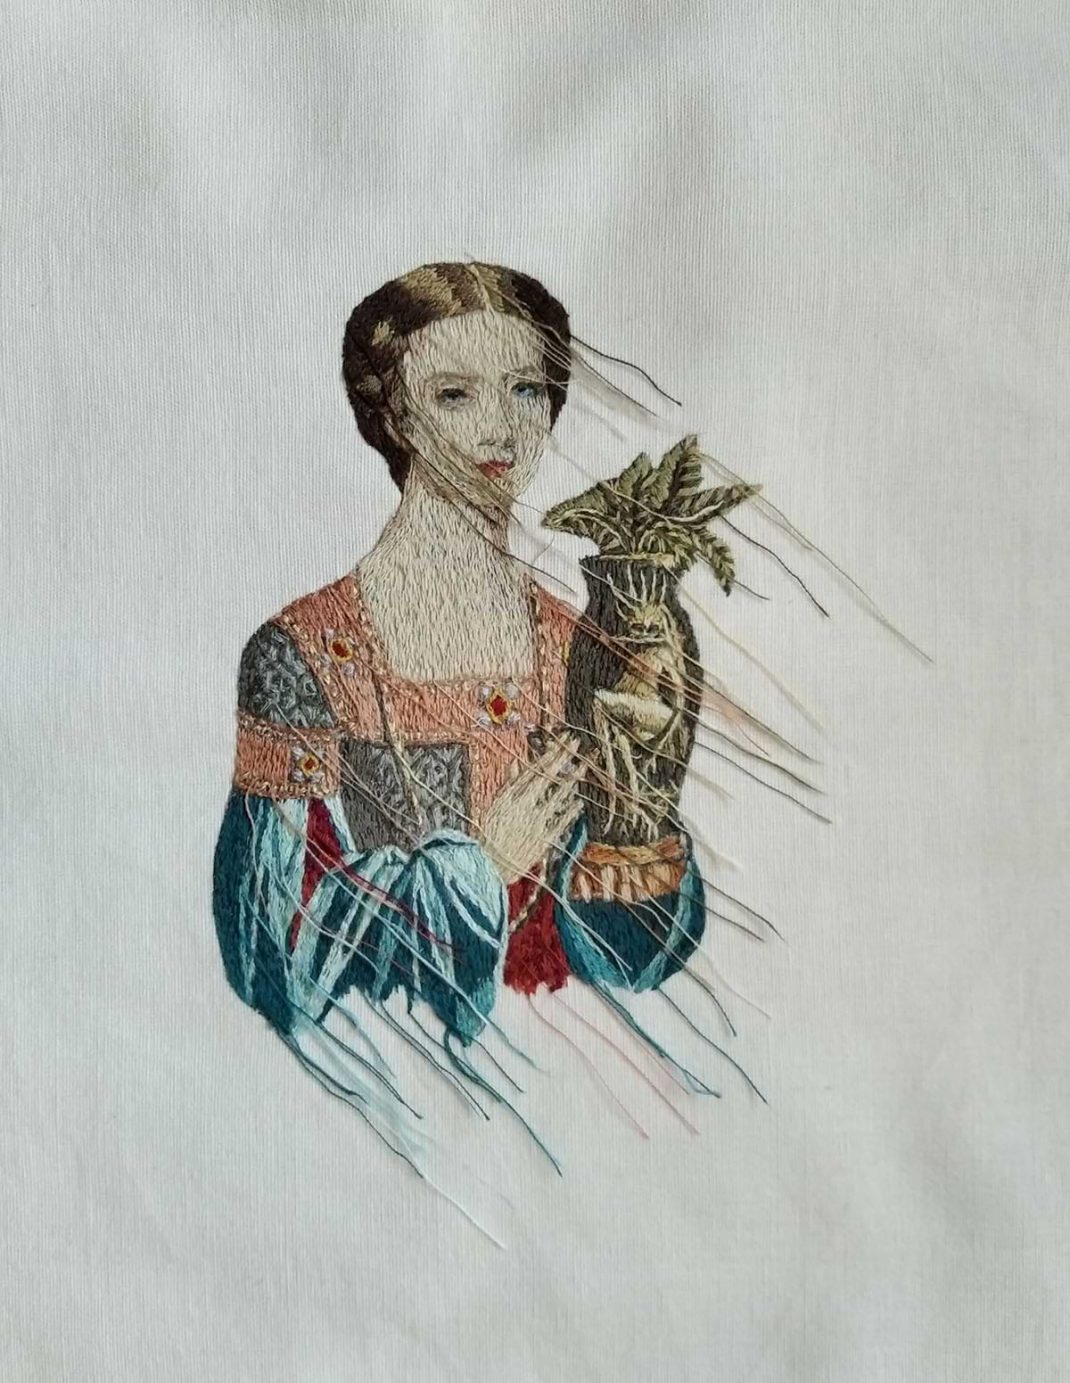 Iphigeneia Sdoukou. Embroidery by hand. Woman holding jar of mandrake